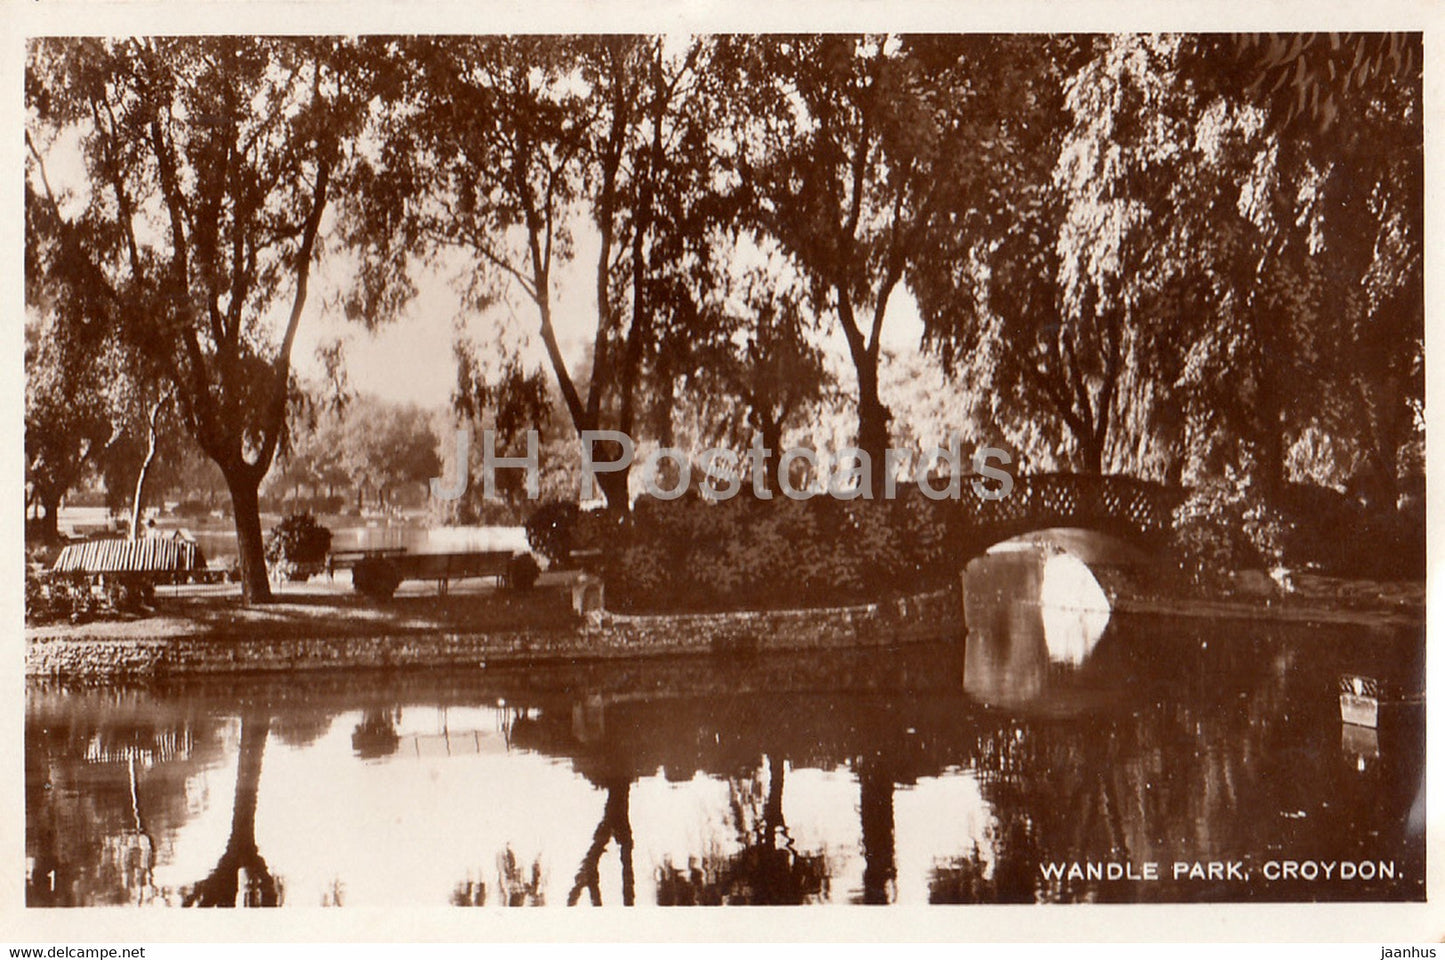 Croydon - Wandle Park - 1 - old postcard - England - United Kingdom - used - JH Postcards